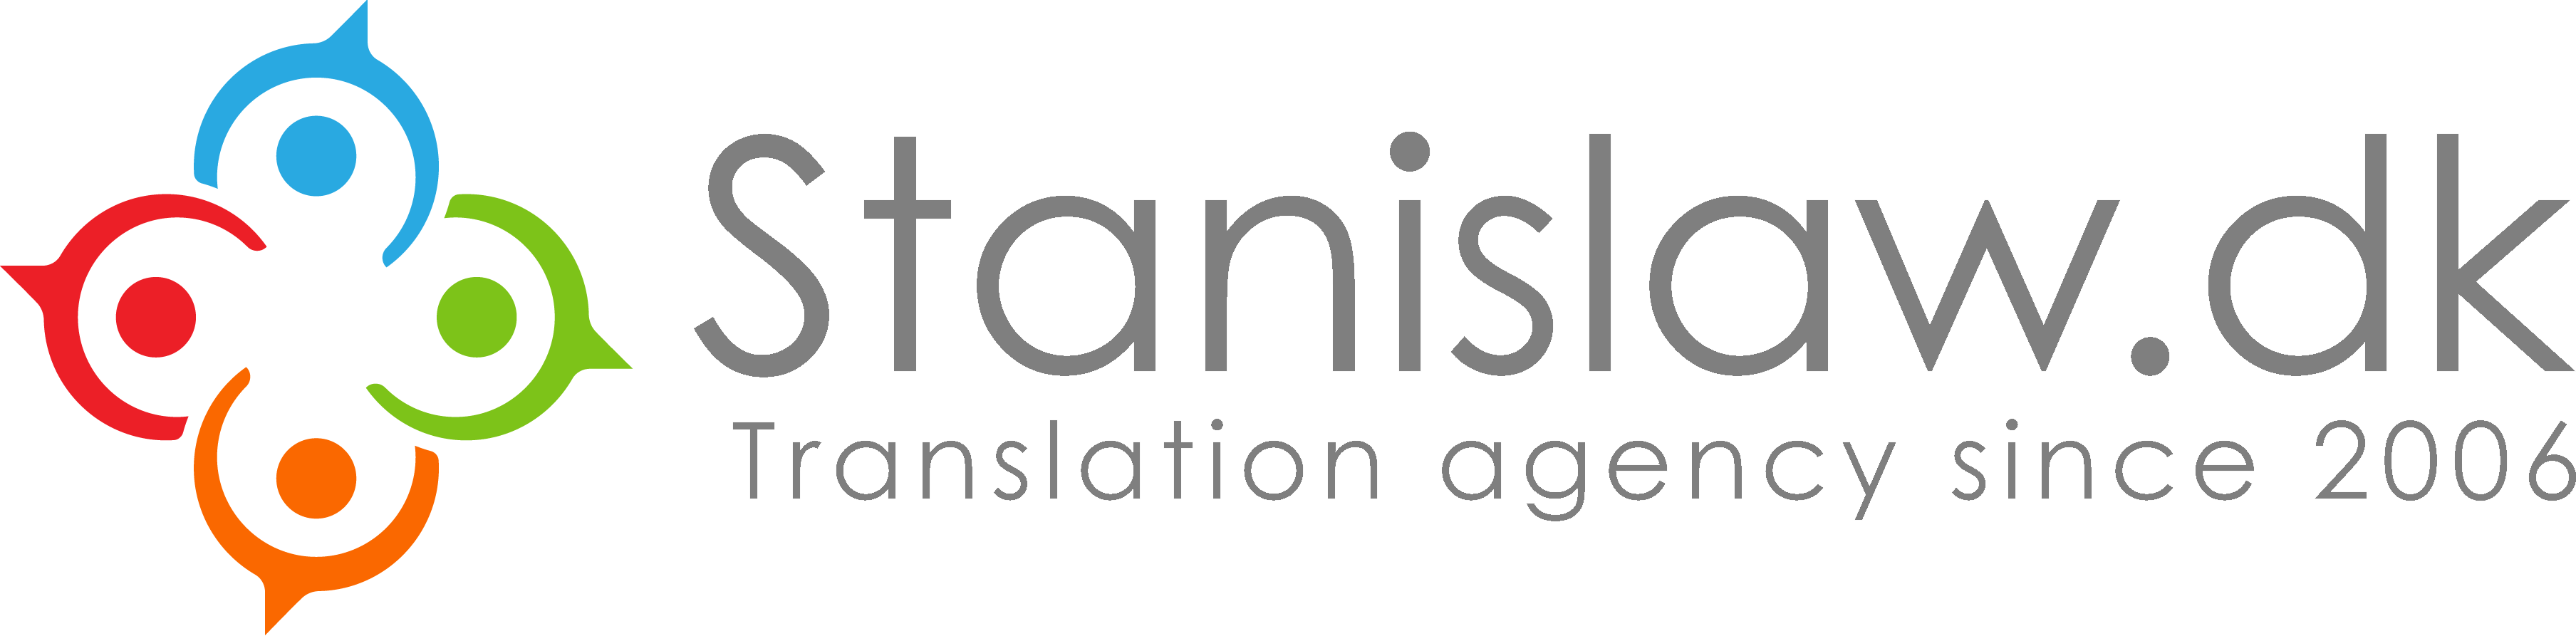 Logo-Stanislaw.dk.png